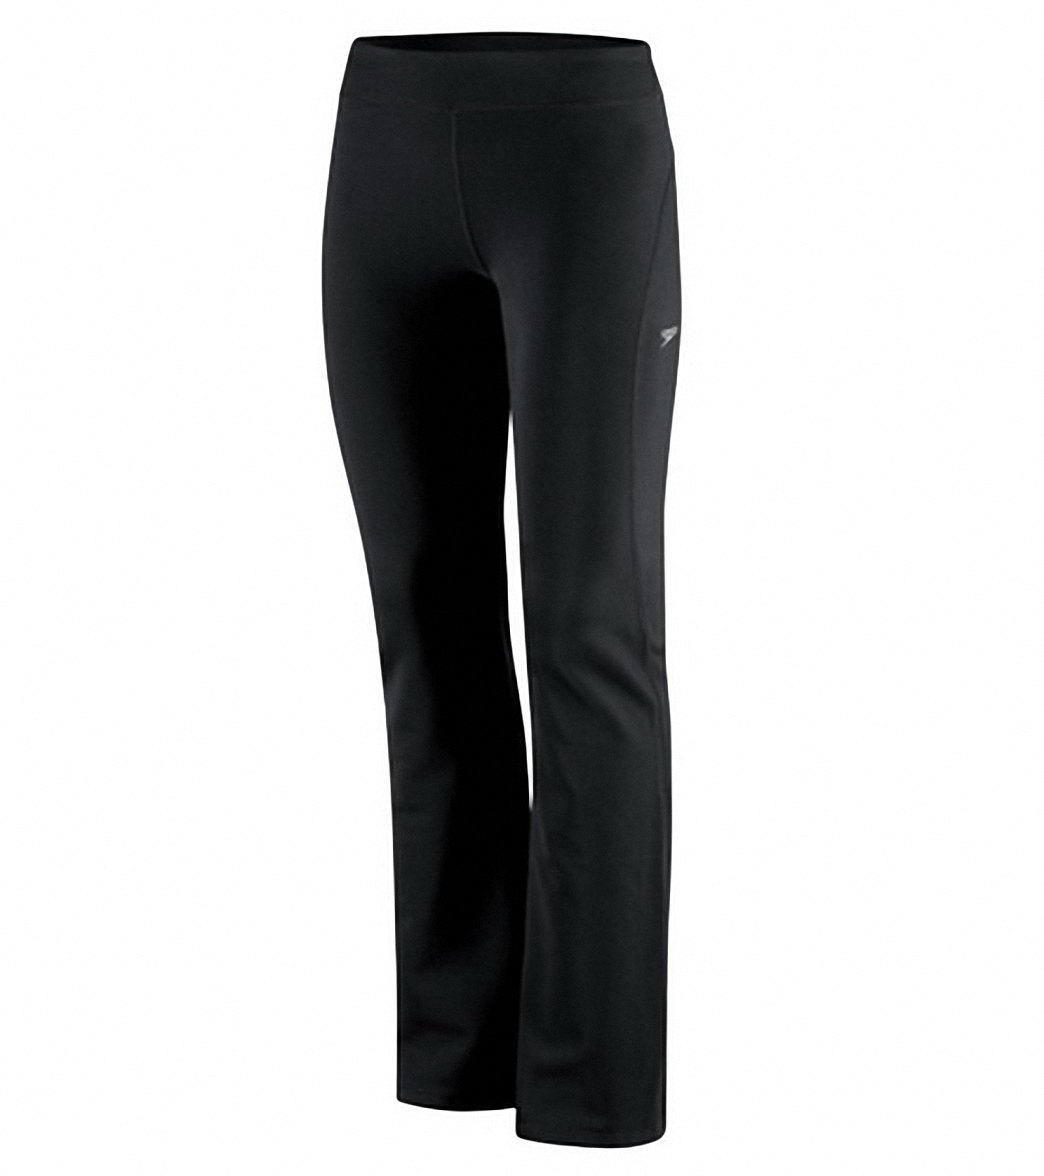 Speedo Women's Yoga Pants - Black Xl - Swimoutlet.com